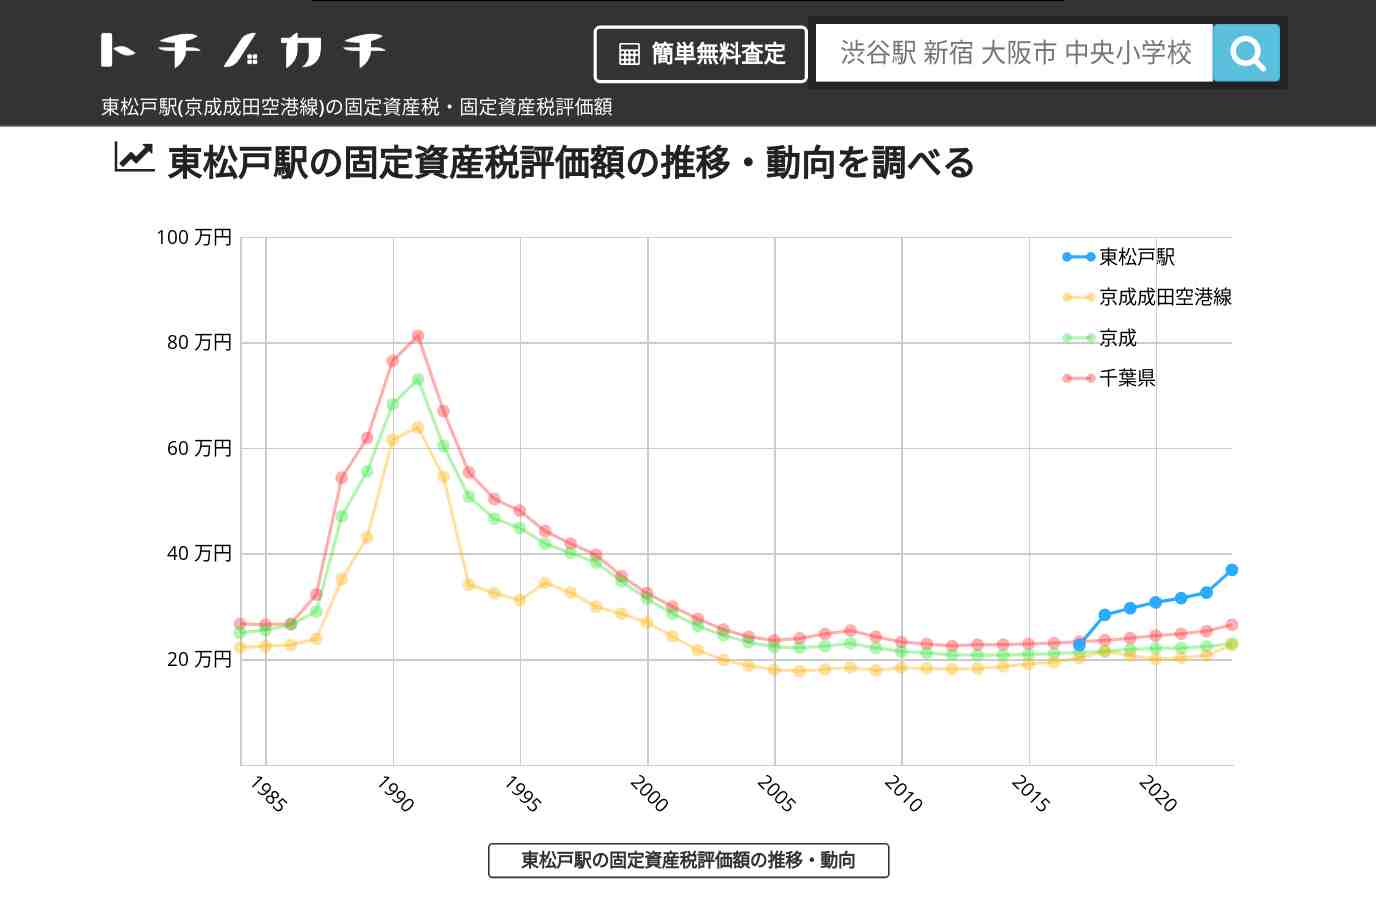 東松戸駅(京成成田空港線)の固定資産税・固定資産税評価額 | トチノカチ